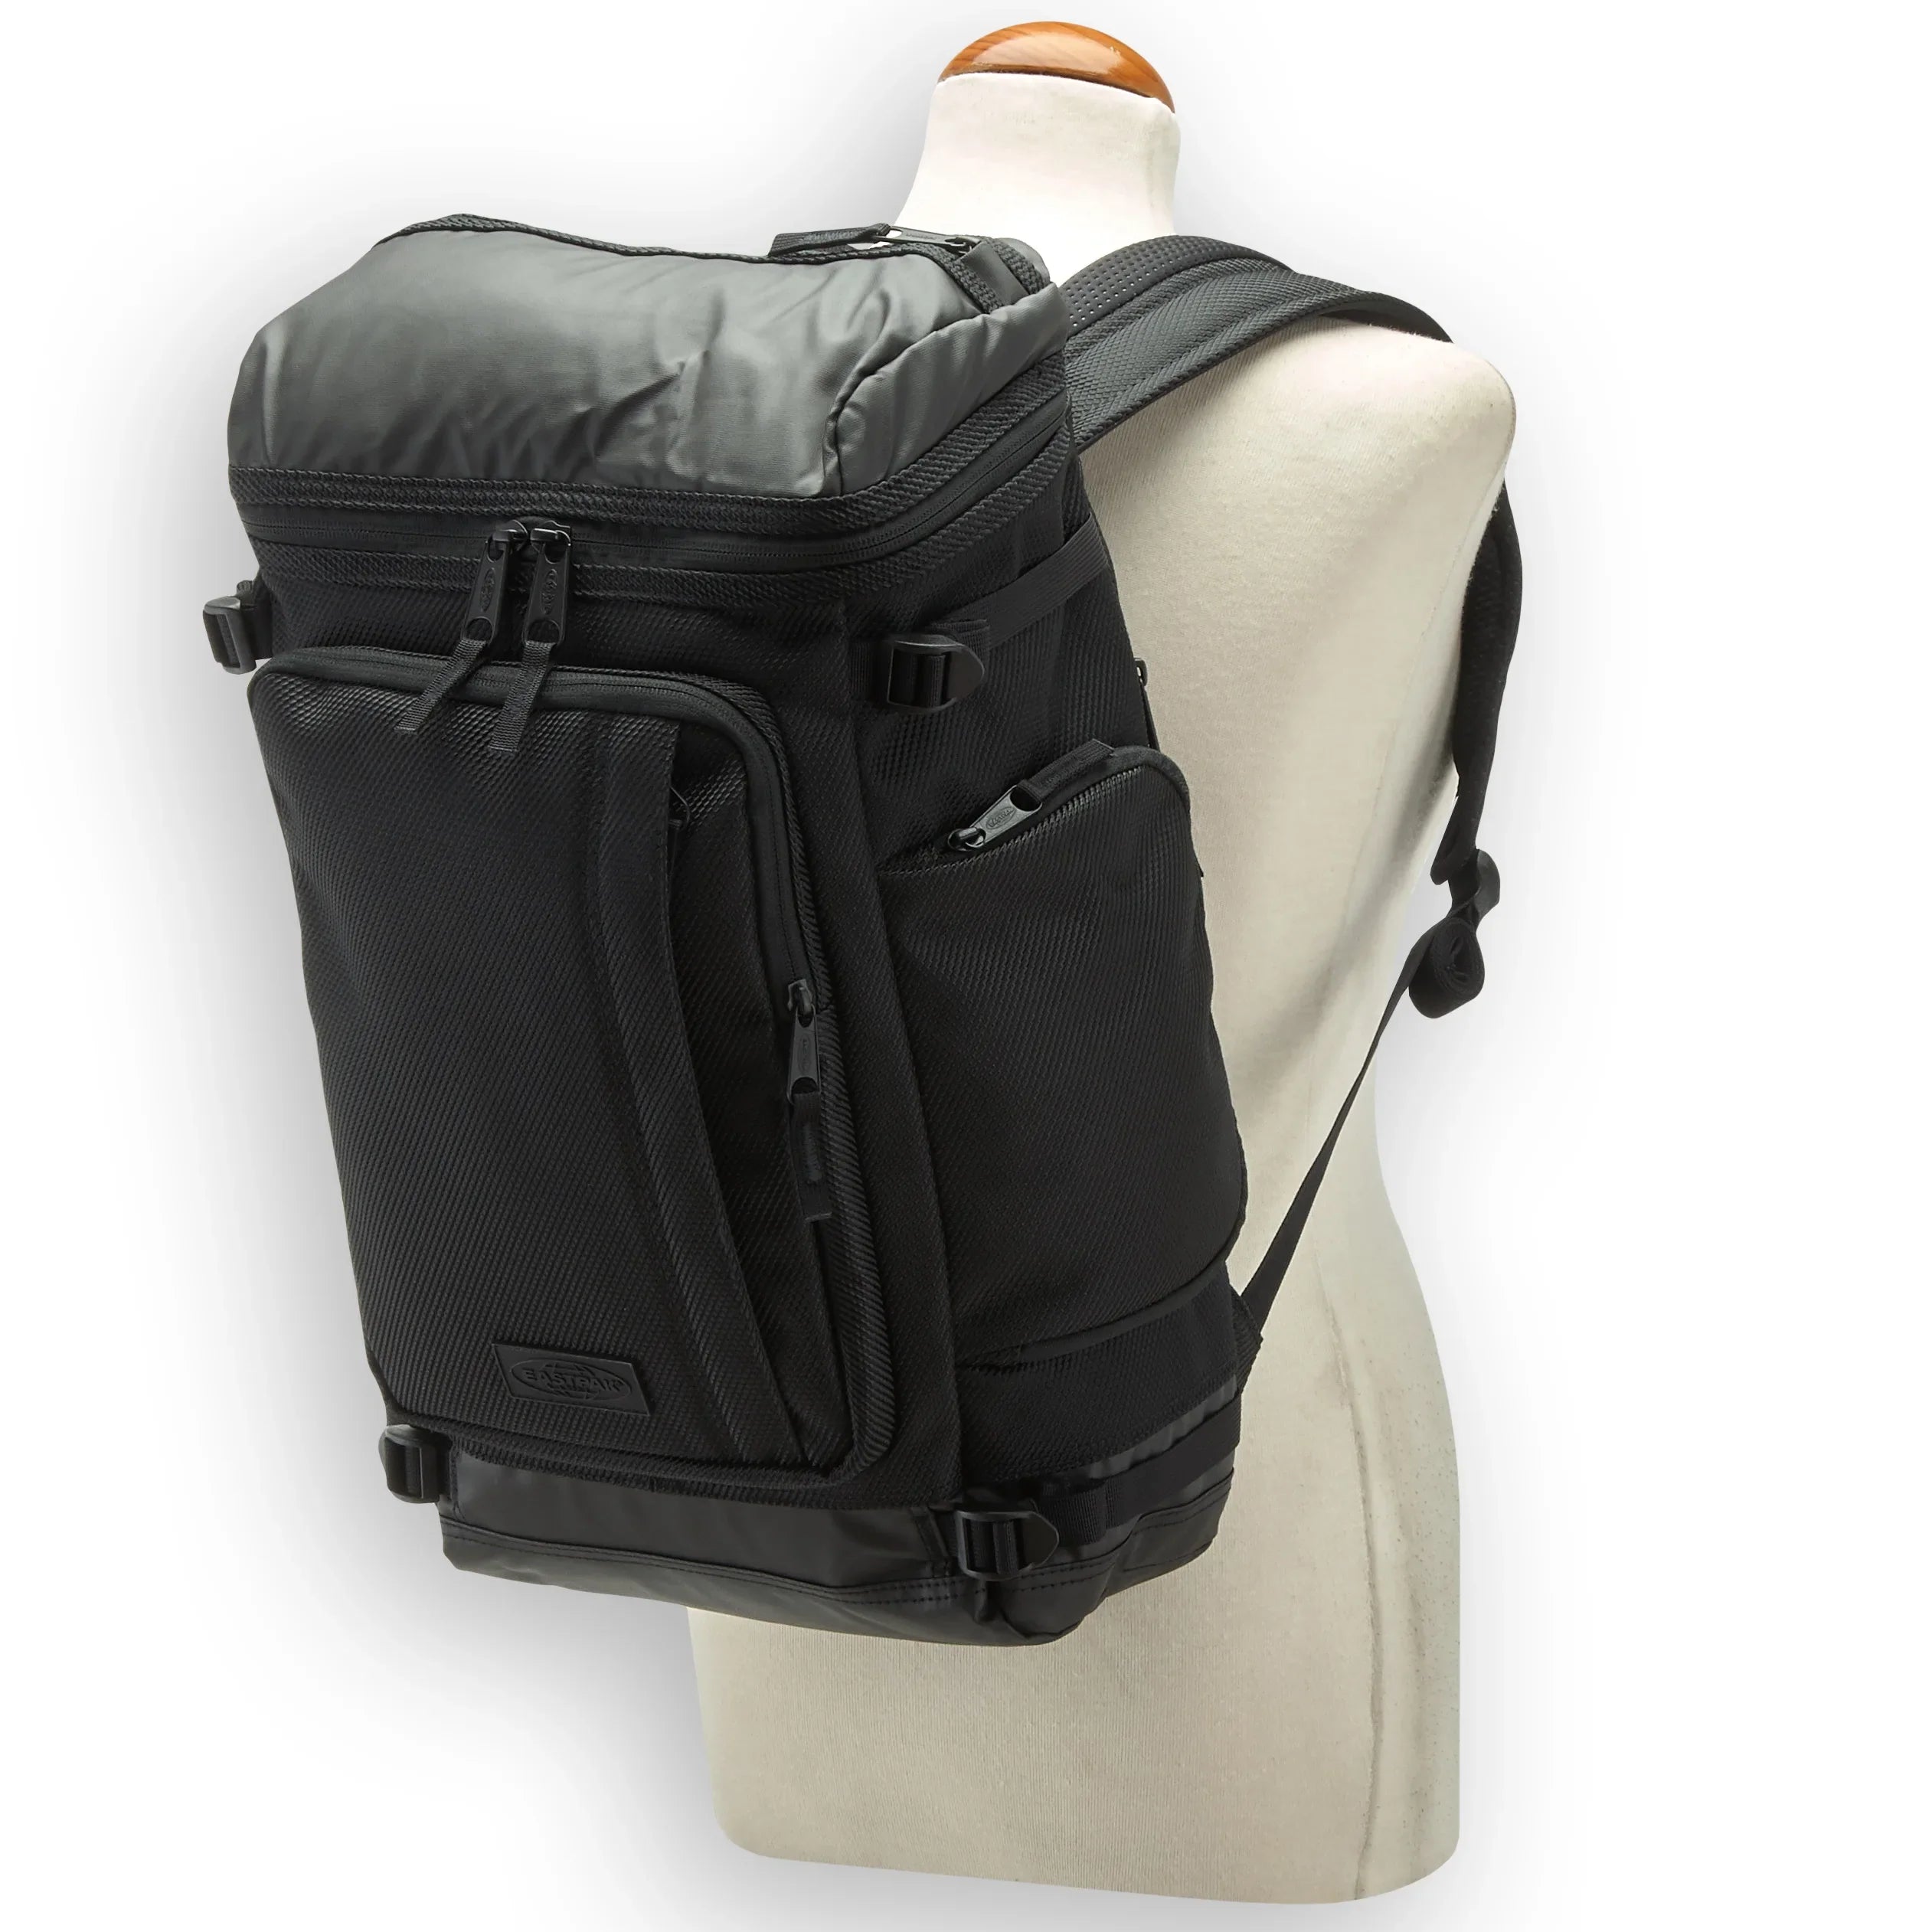 Eastpak Authentic Tecum Top Backpack CNNCT 49 cm - Cnnct Khaki